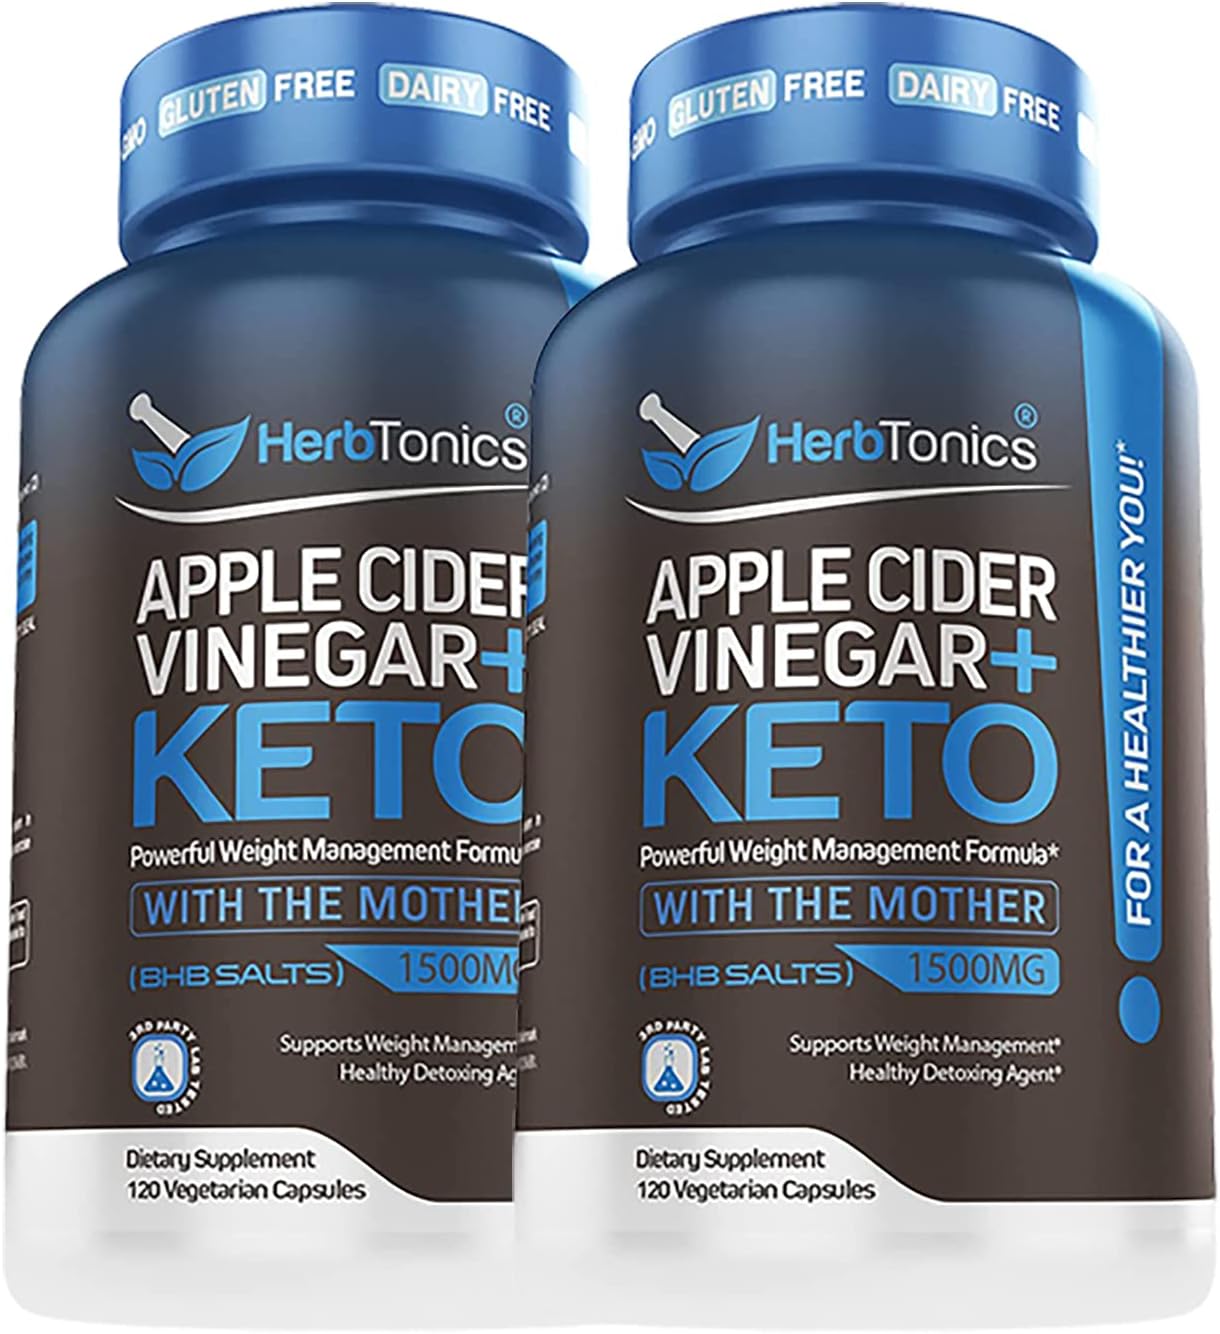 Herbtonics Apple Cider Vinegar Capsules with The Mother Plus Keto BHB